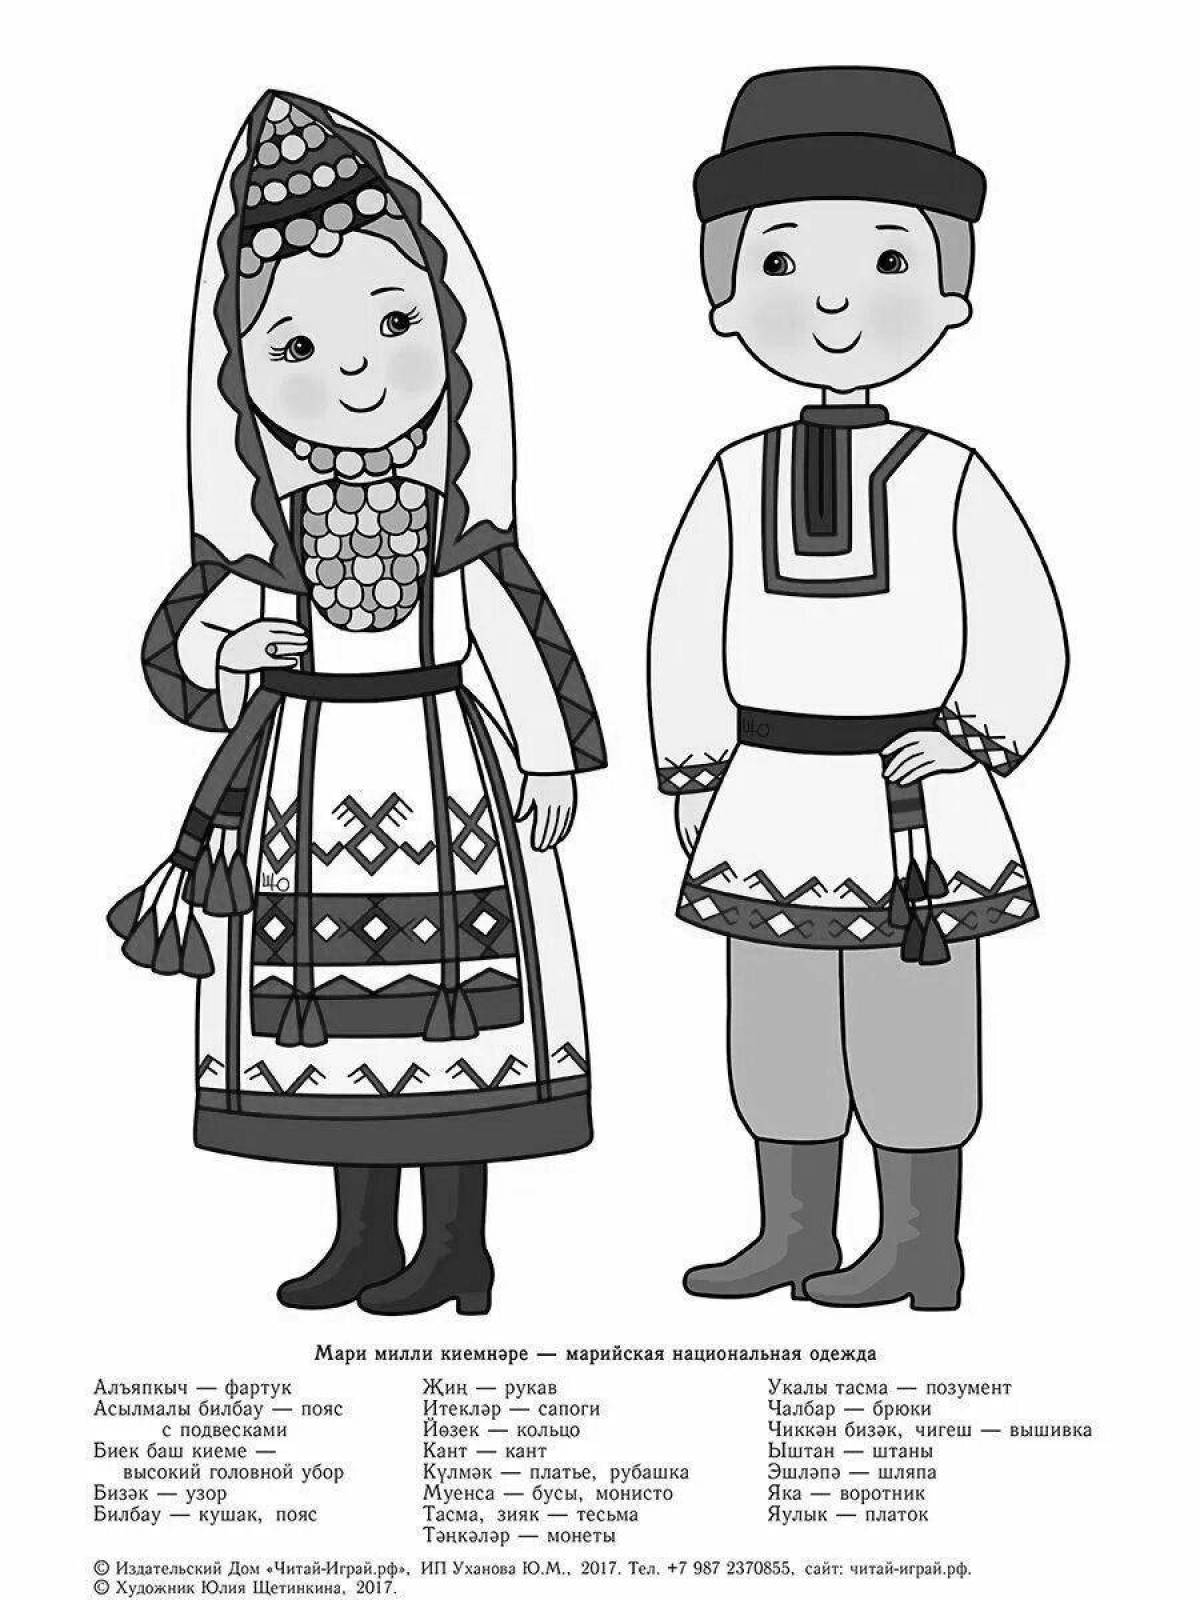 Amazing Belarusian national costume for children